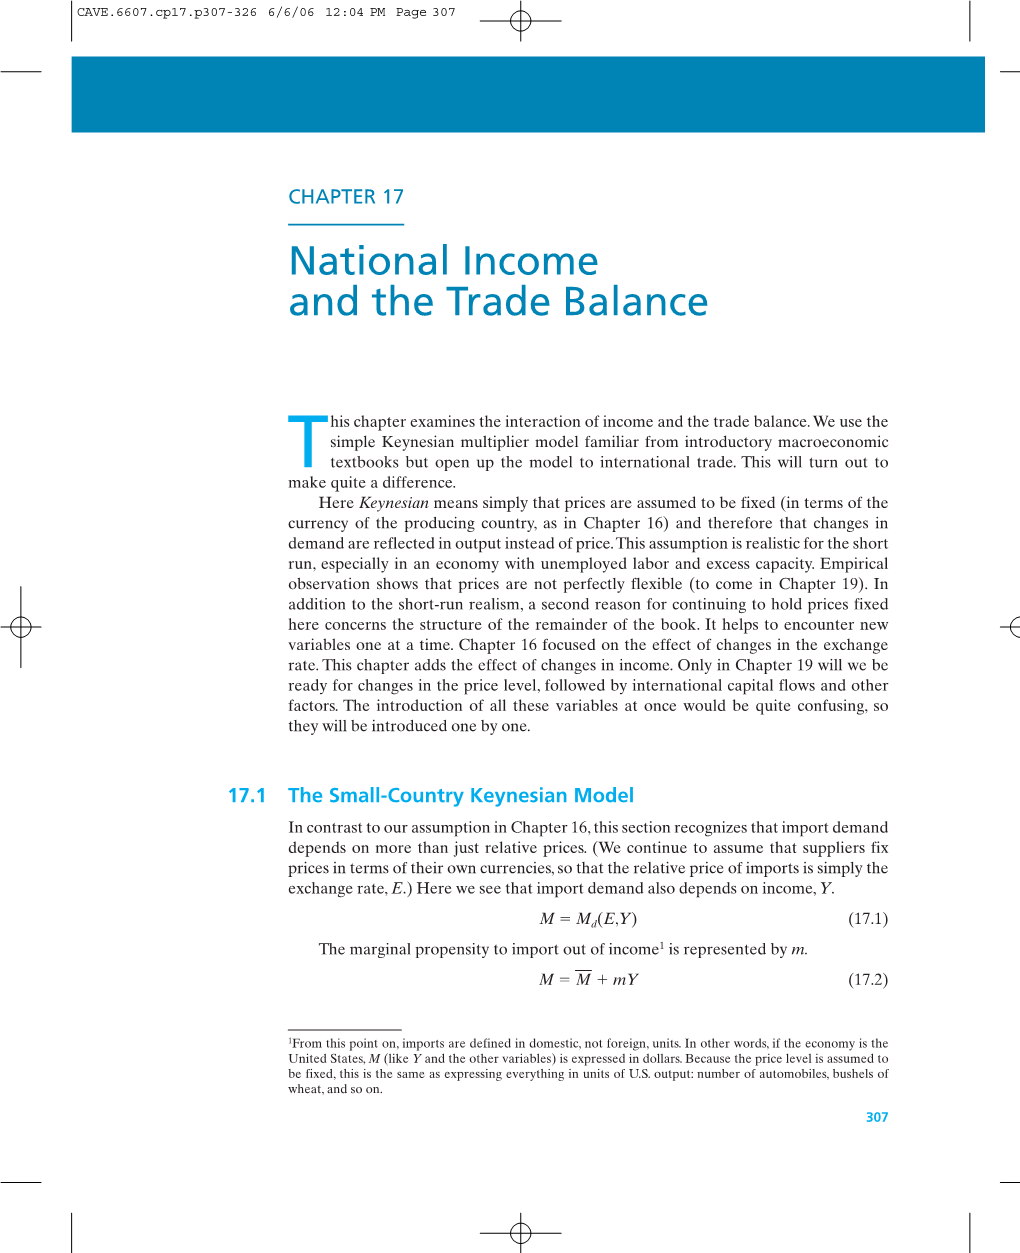 National Income and the Trade Balance